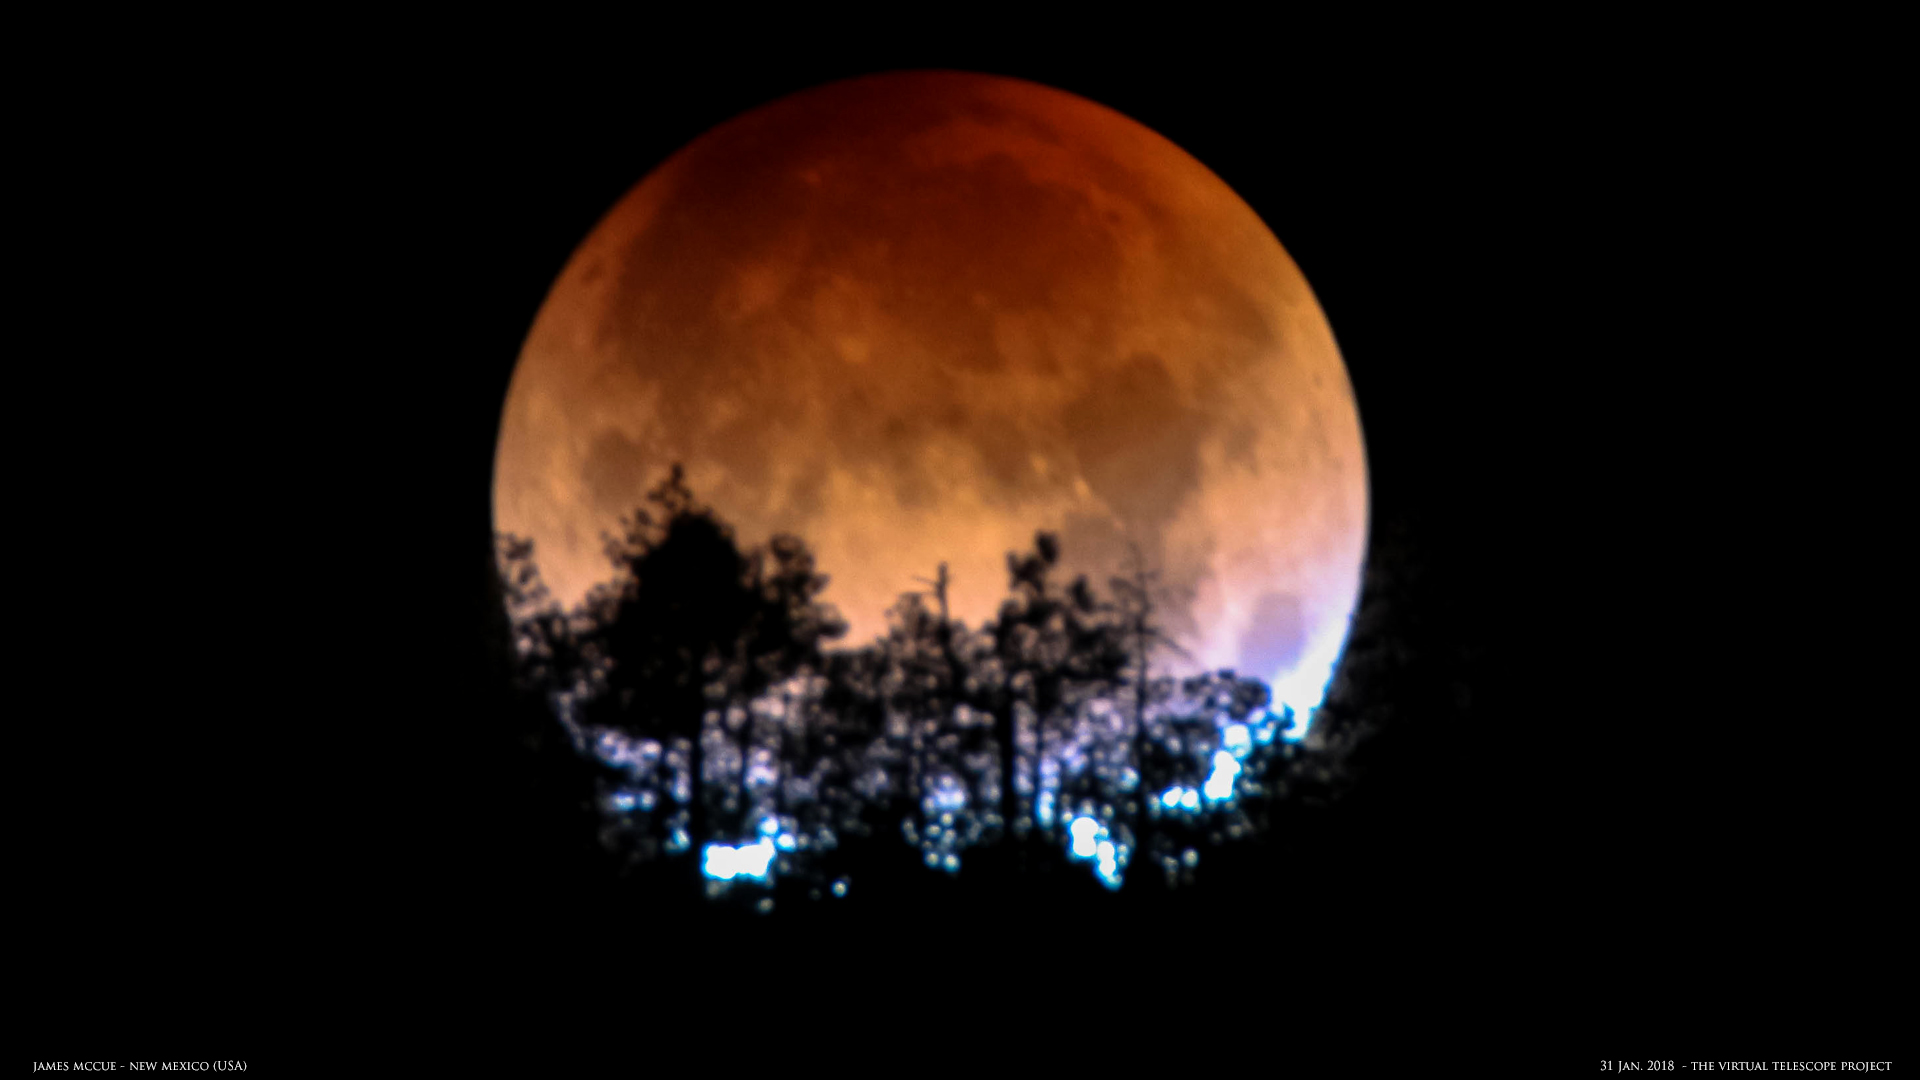 moon lunar eclipse blood moon